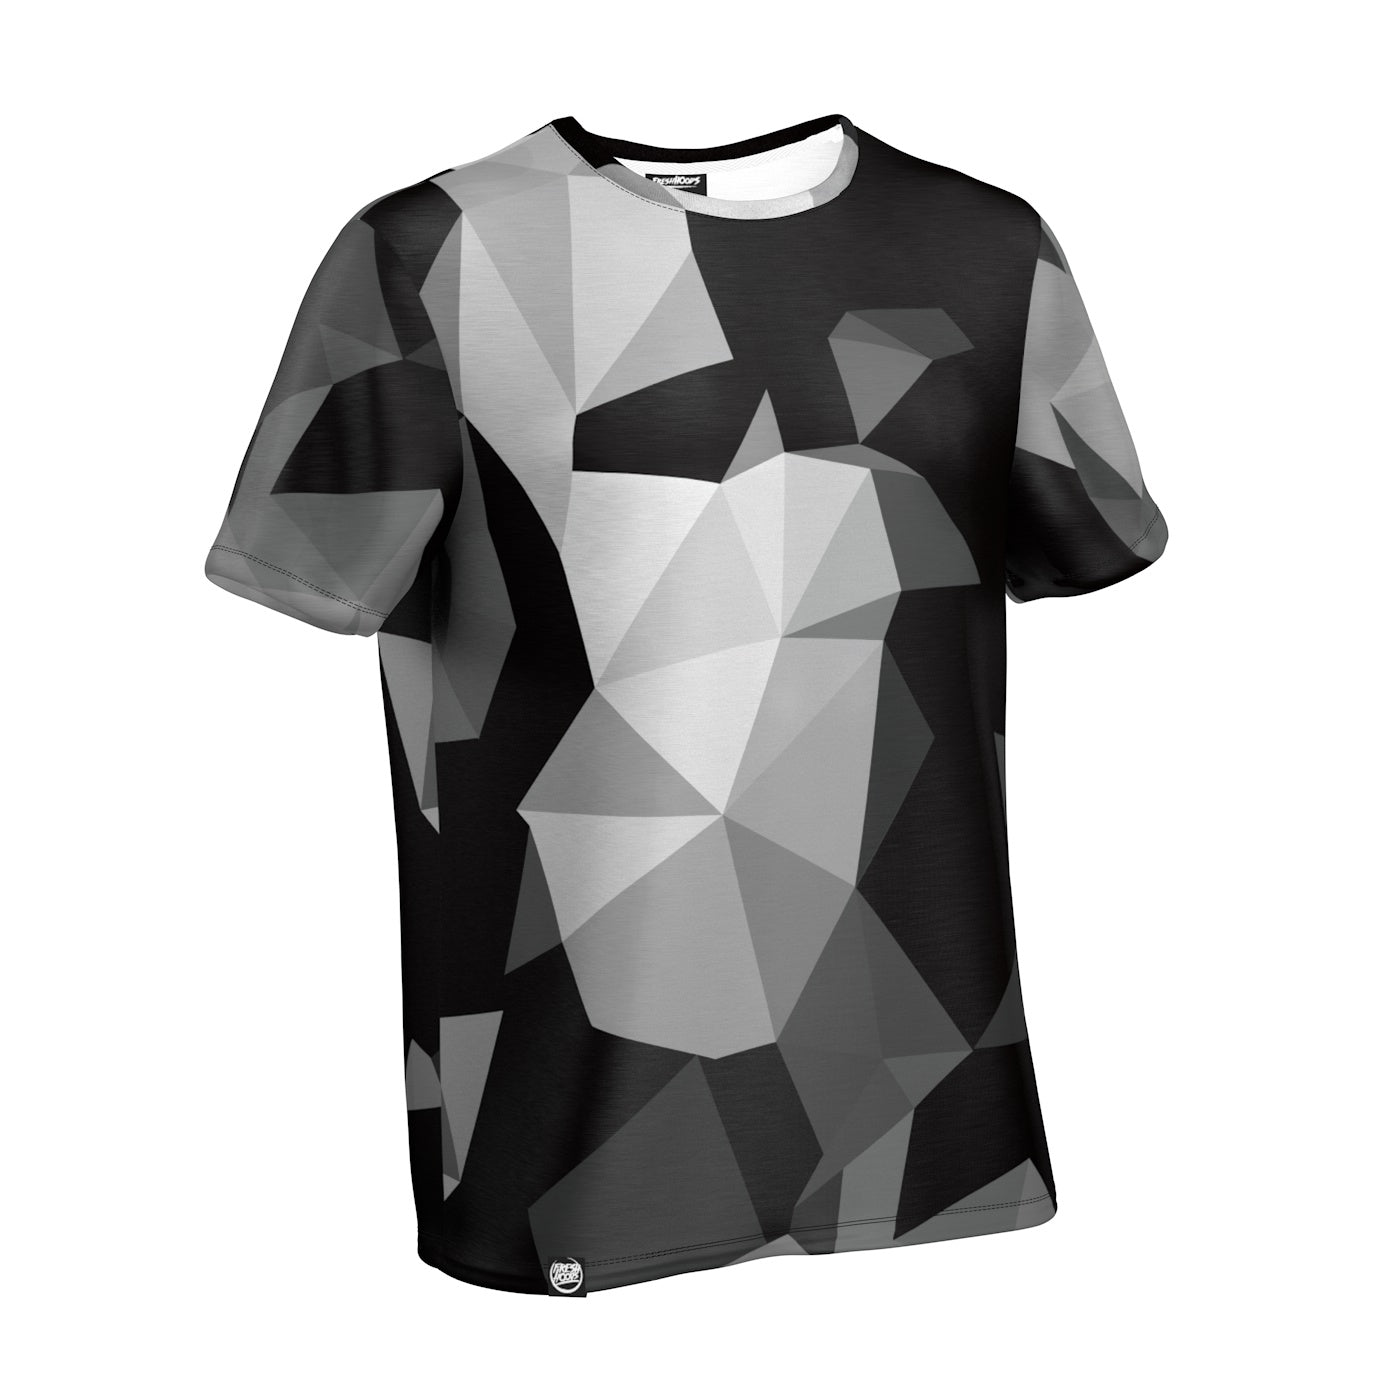 Cubes Black T-Shirt